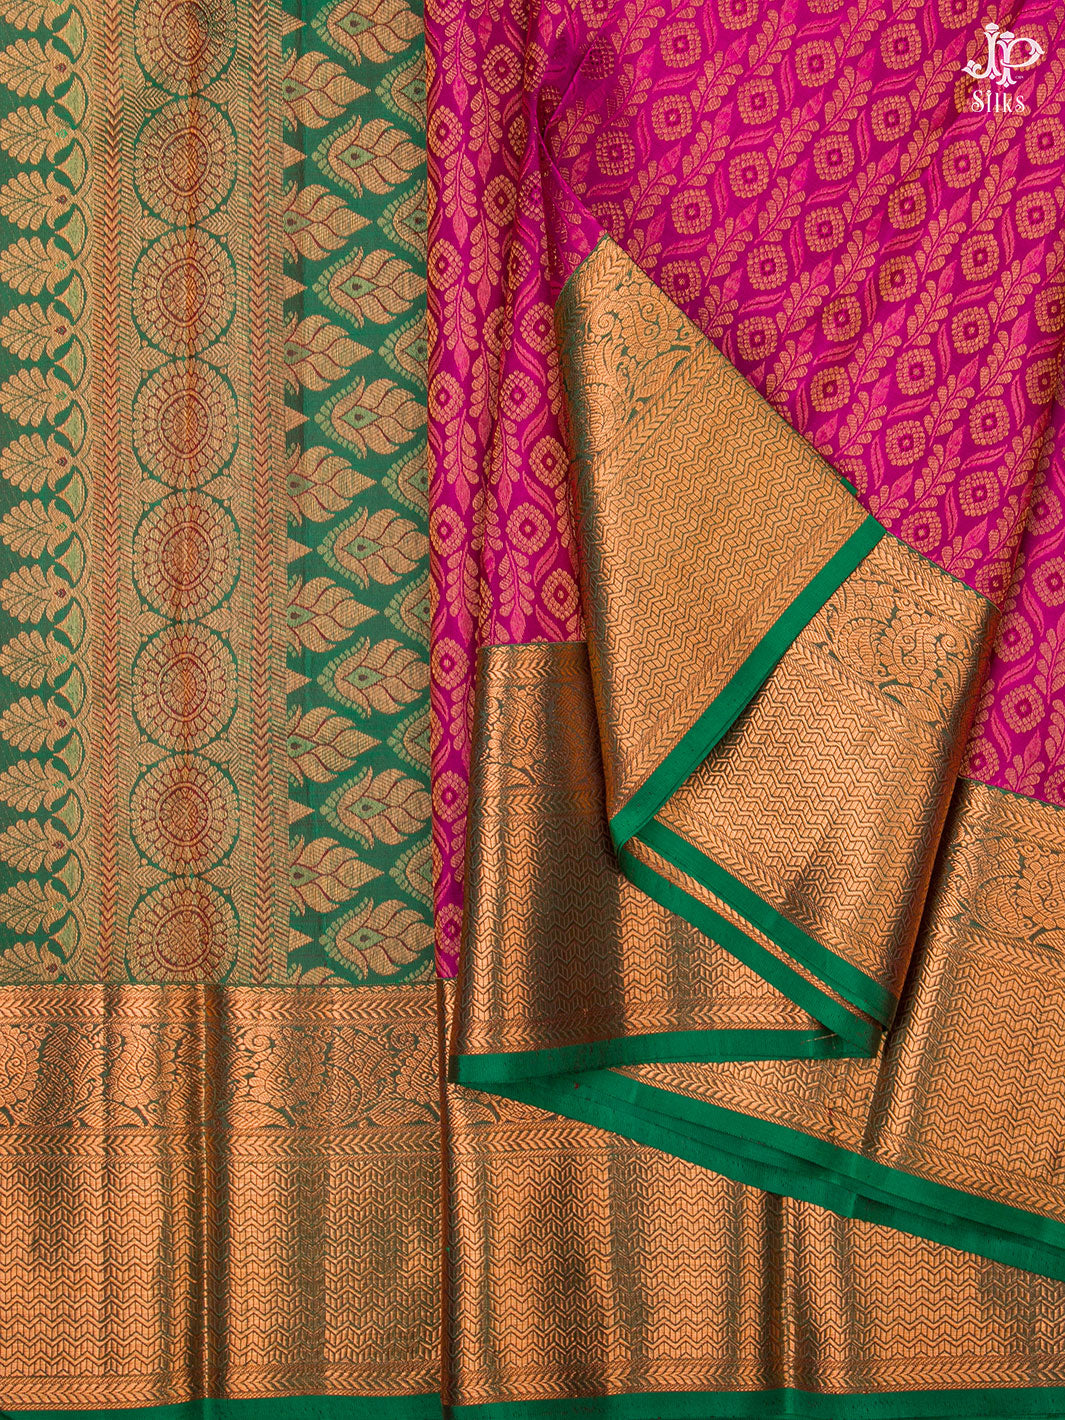 Magenta Pink and Green Kanchipuram Silk Saree - D2807 - View 5